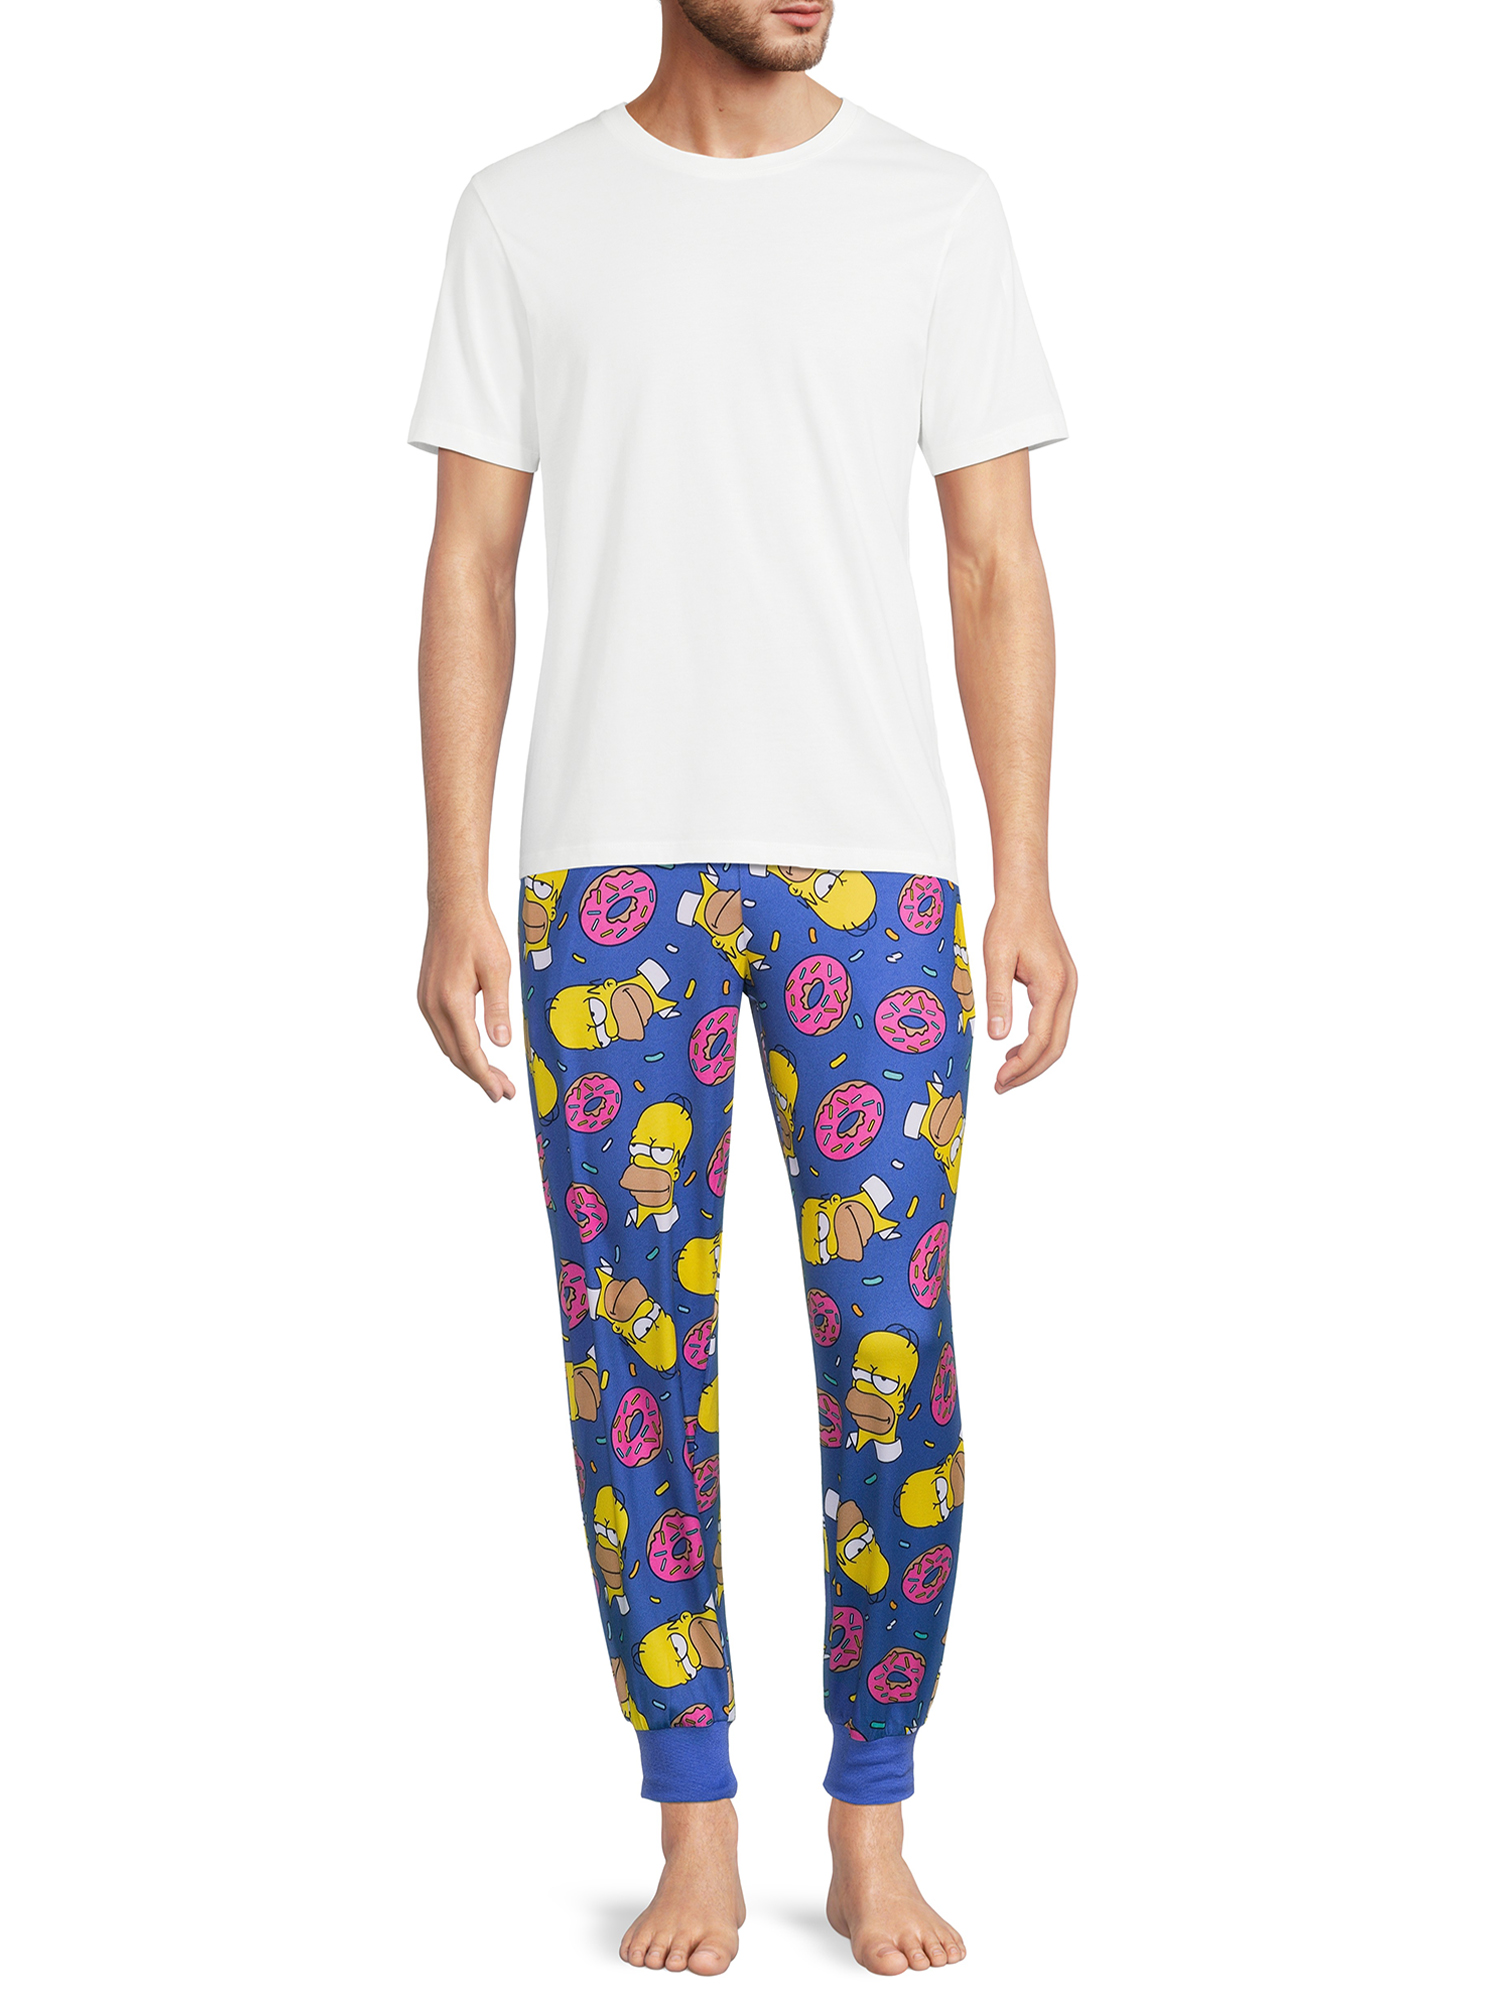 The Simpsons, Adult Mens, Homer Sprinkles Lounge Pajamas Sleep Pants, Sizes S-2XL - image 2 of 5